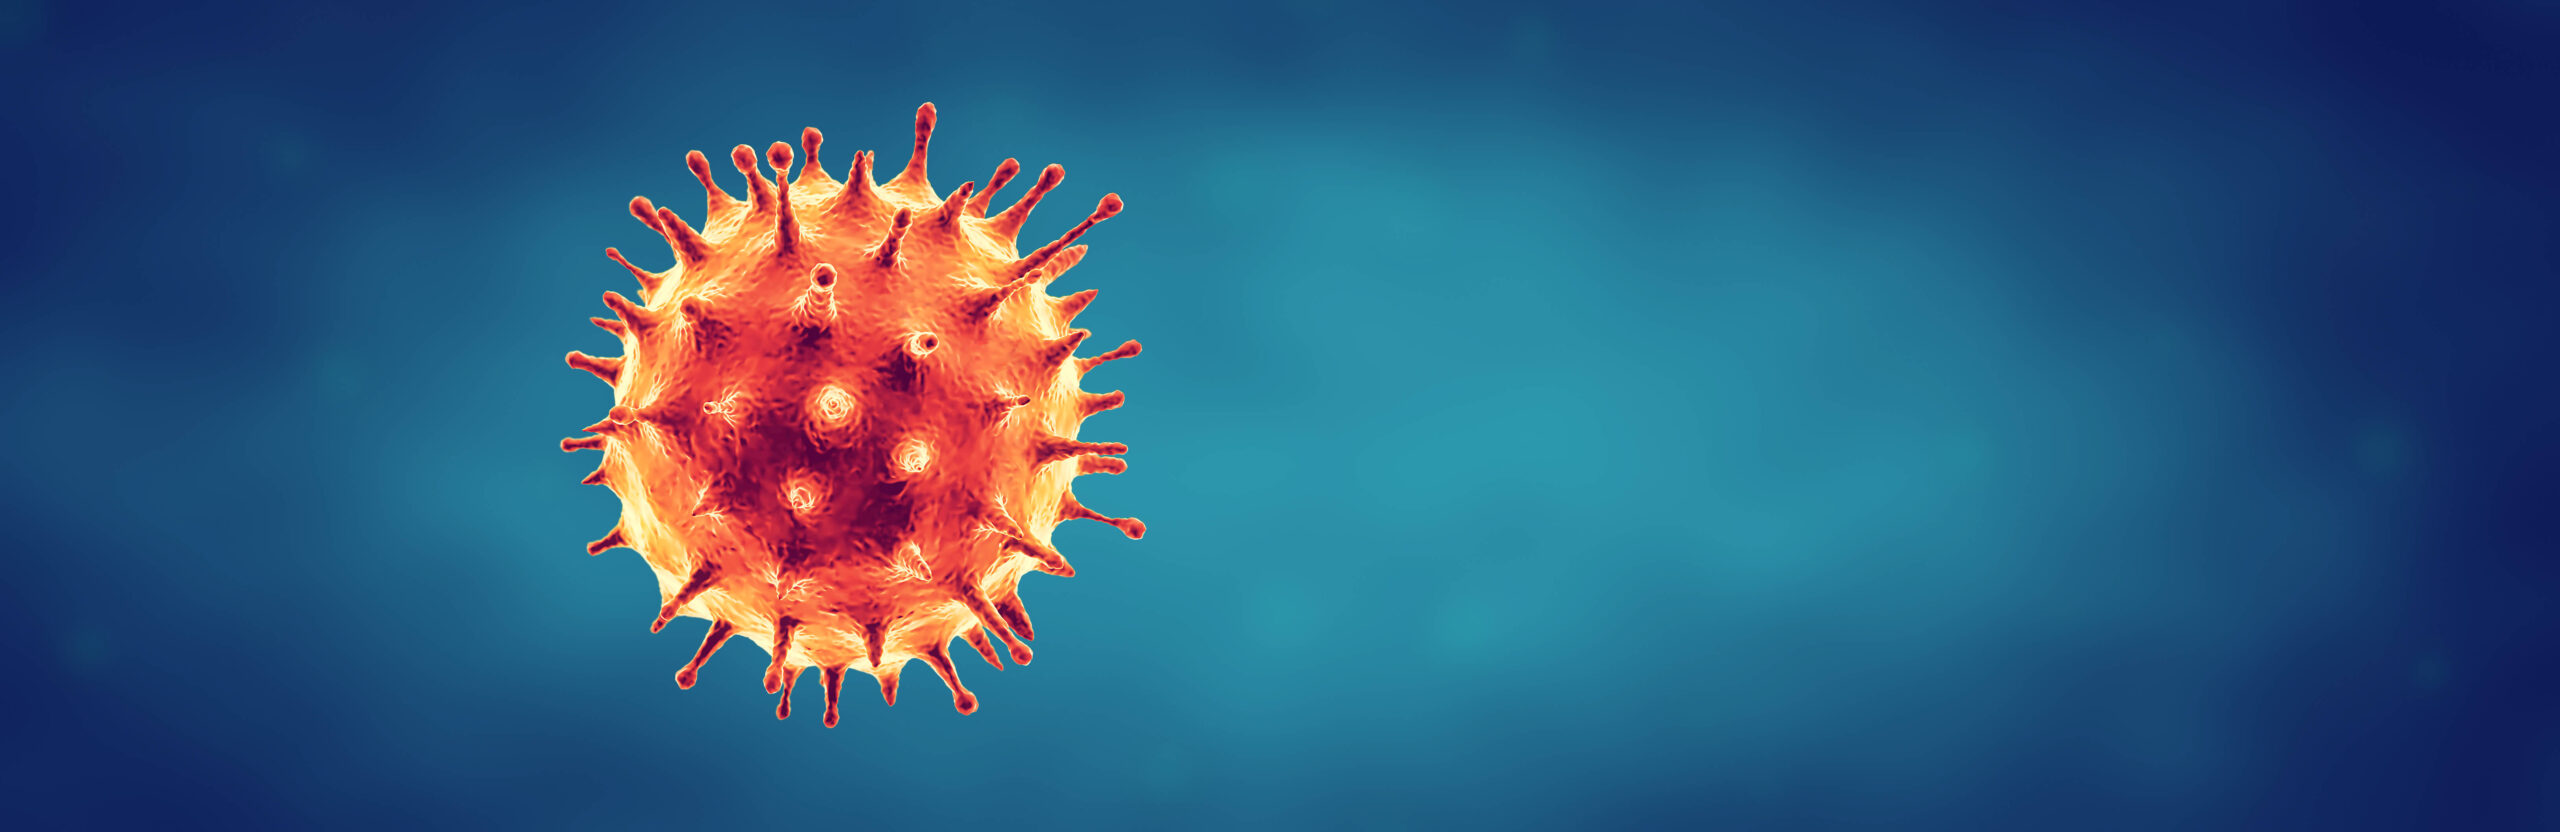 Persona Neurobehavior Group: Coronavirus or Flu virus - Microbiology And Virology Concept